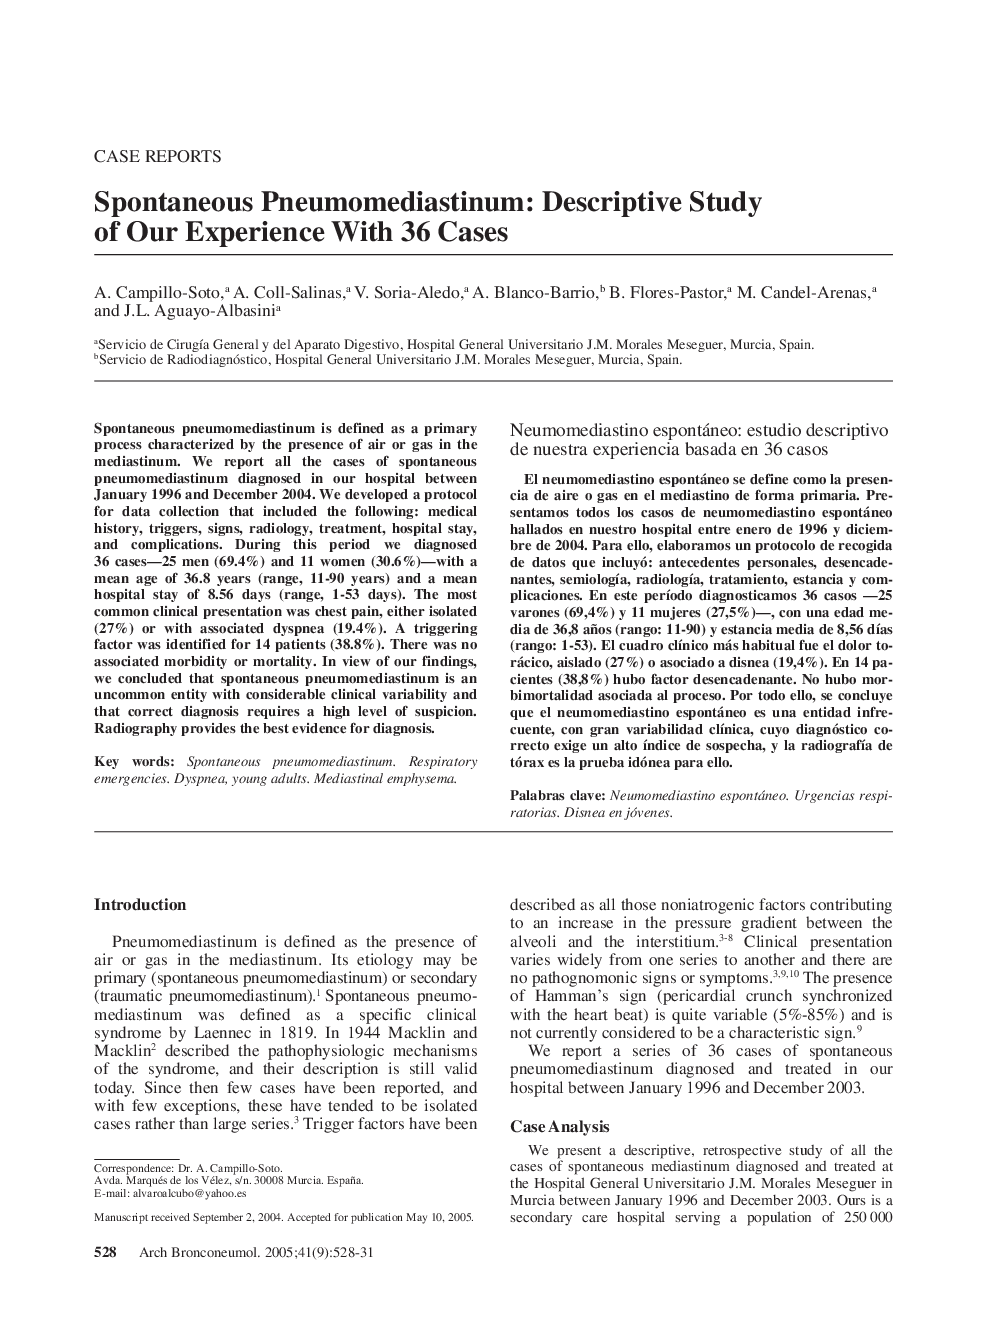 Spontaneous Pneumomediastinum: Descriptive Study of Our Experience With 36 Cases